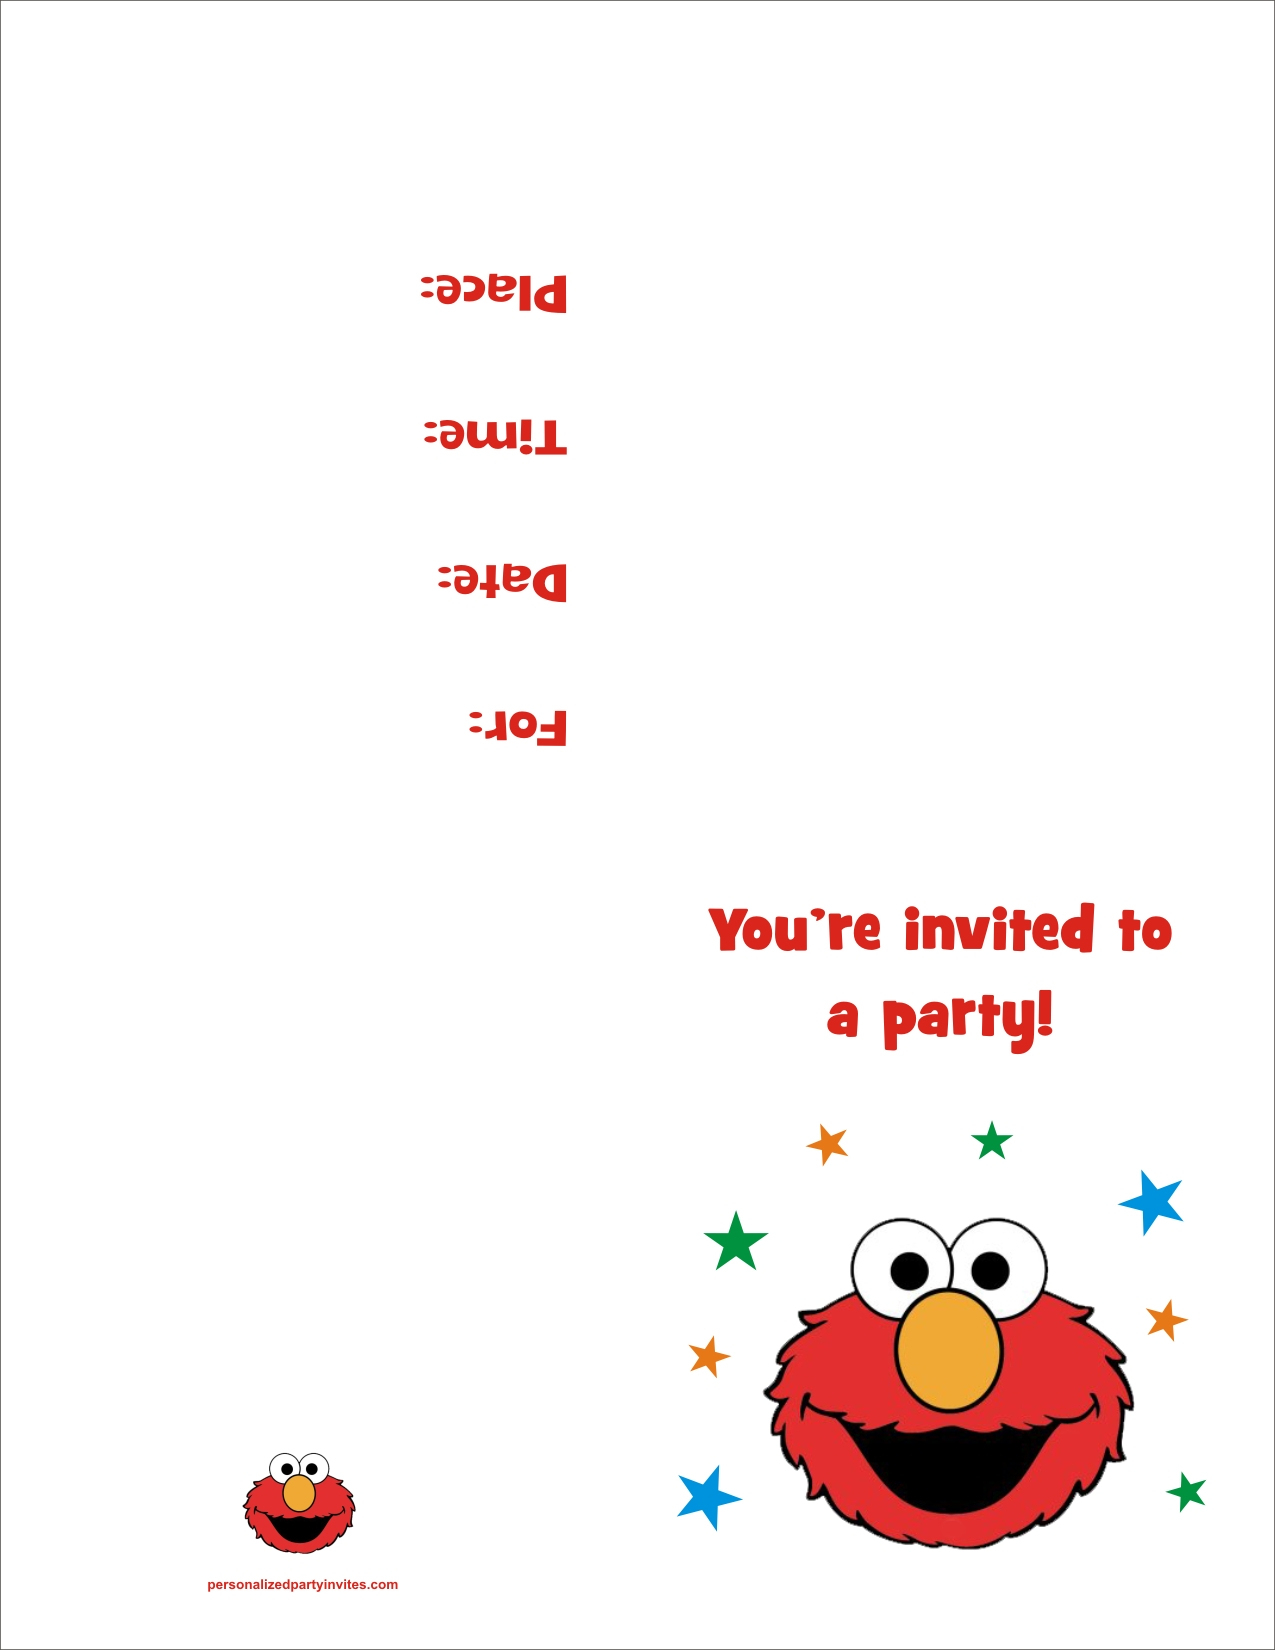 Elmo Free Printable Birthday Party Invitation Personalized Party - Free Personalized Printable Birthday Party Invitations